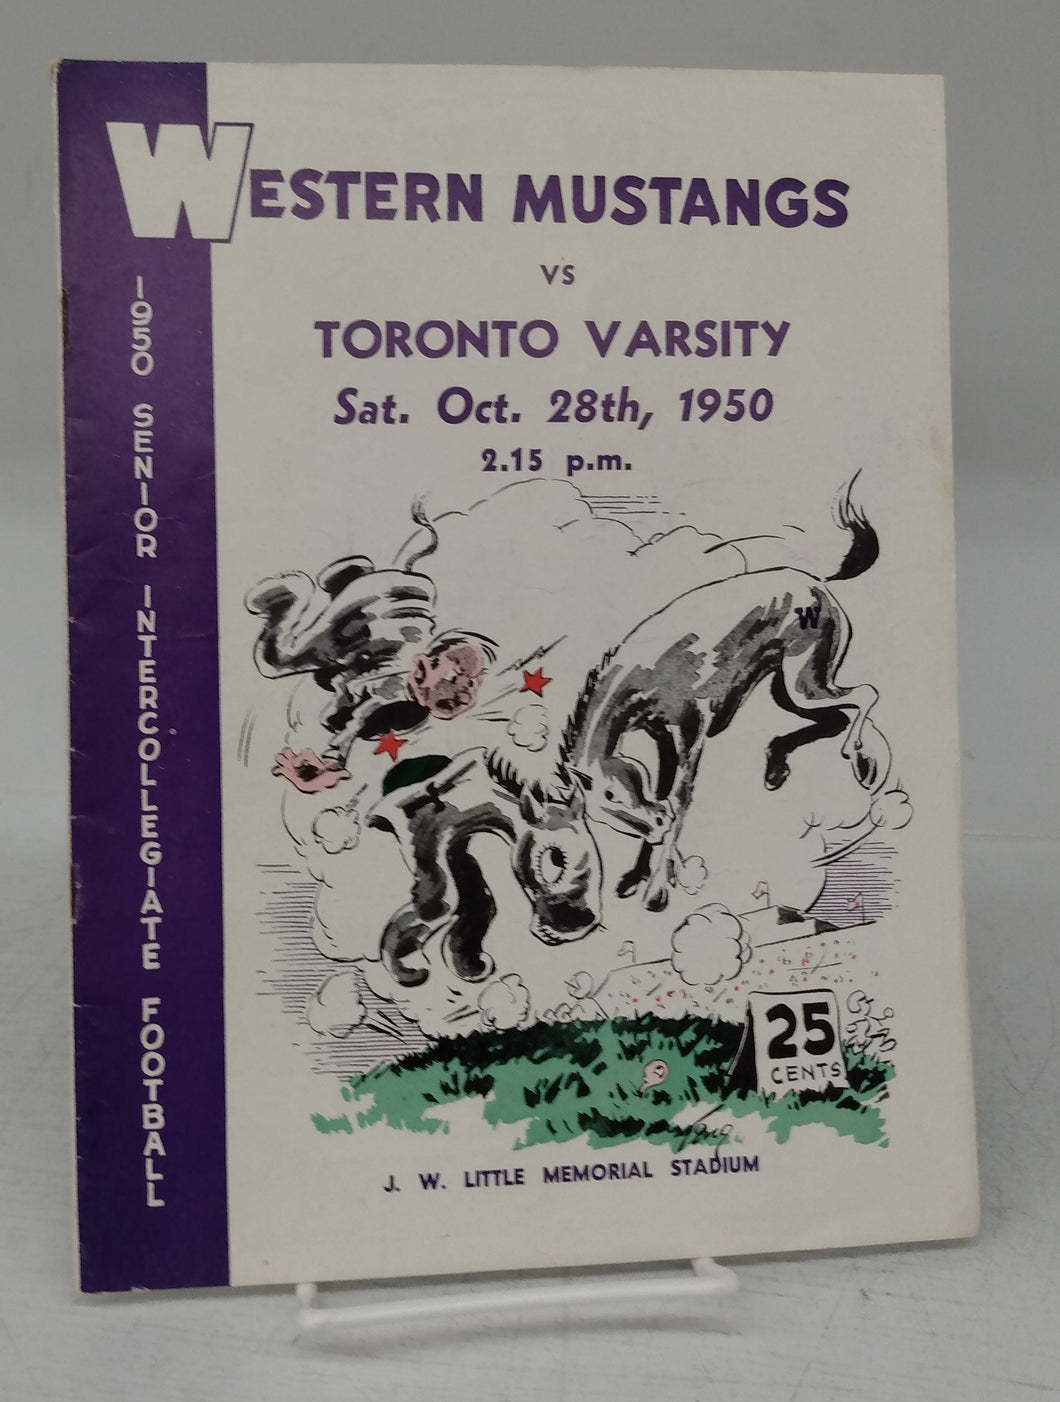 Western Mustangs vs. Toronto Varsity, Oct. 28, 1950